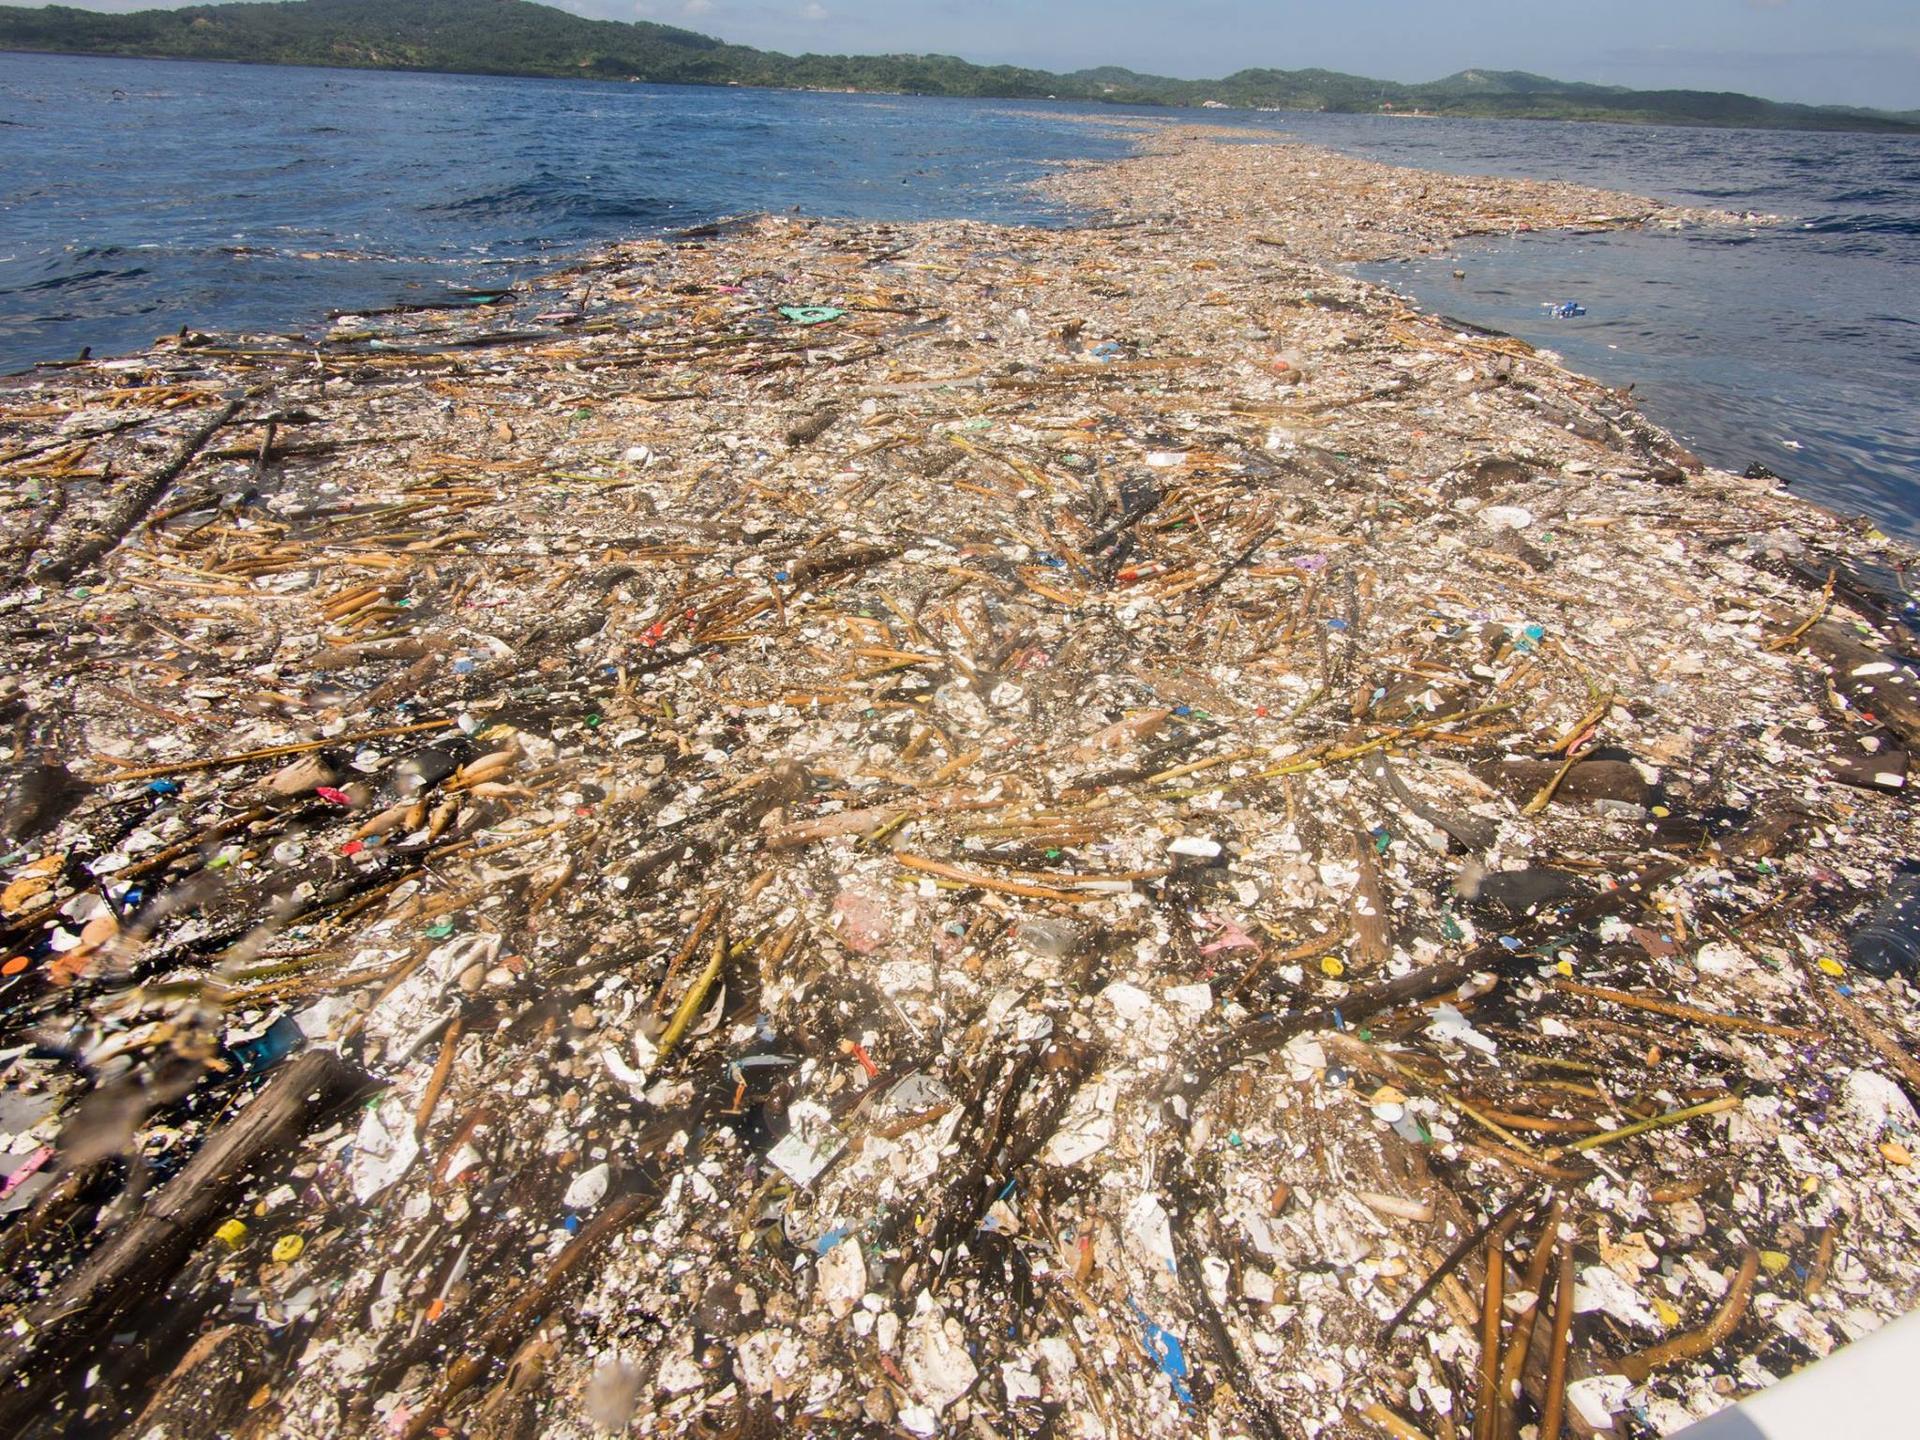 Plastic waste floats off the coast of Roatan, Honduras on September 7, 2017.